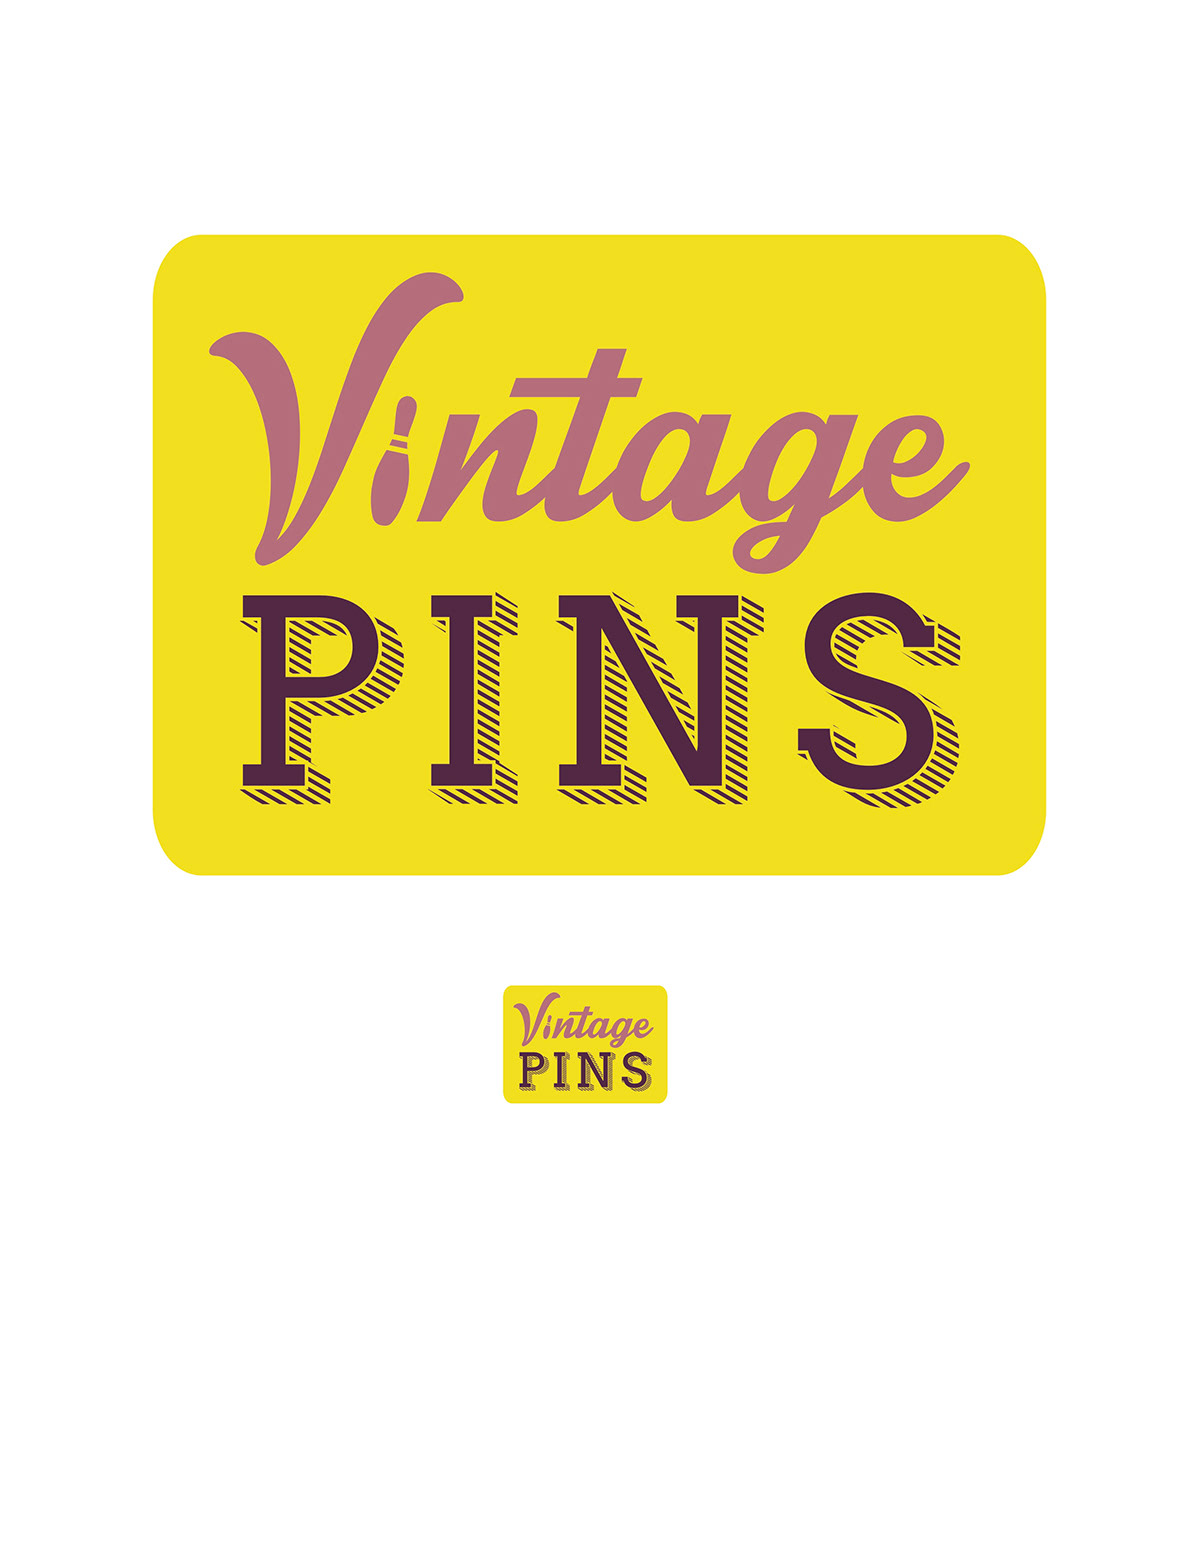 Logotype bowling business card letterhead envelope vintage Hipster pins